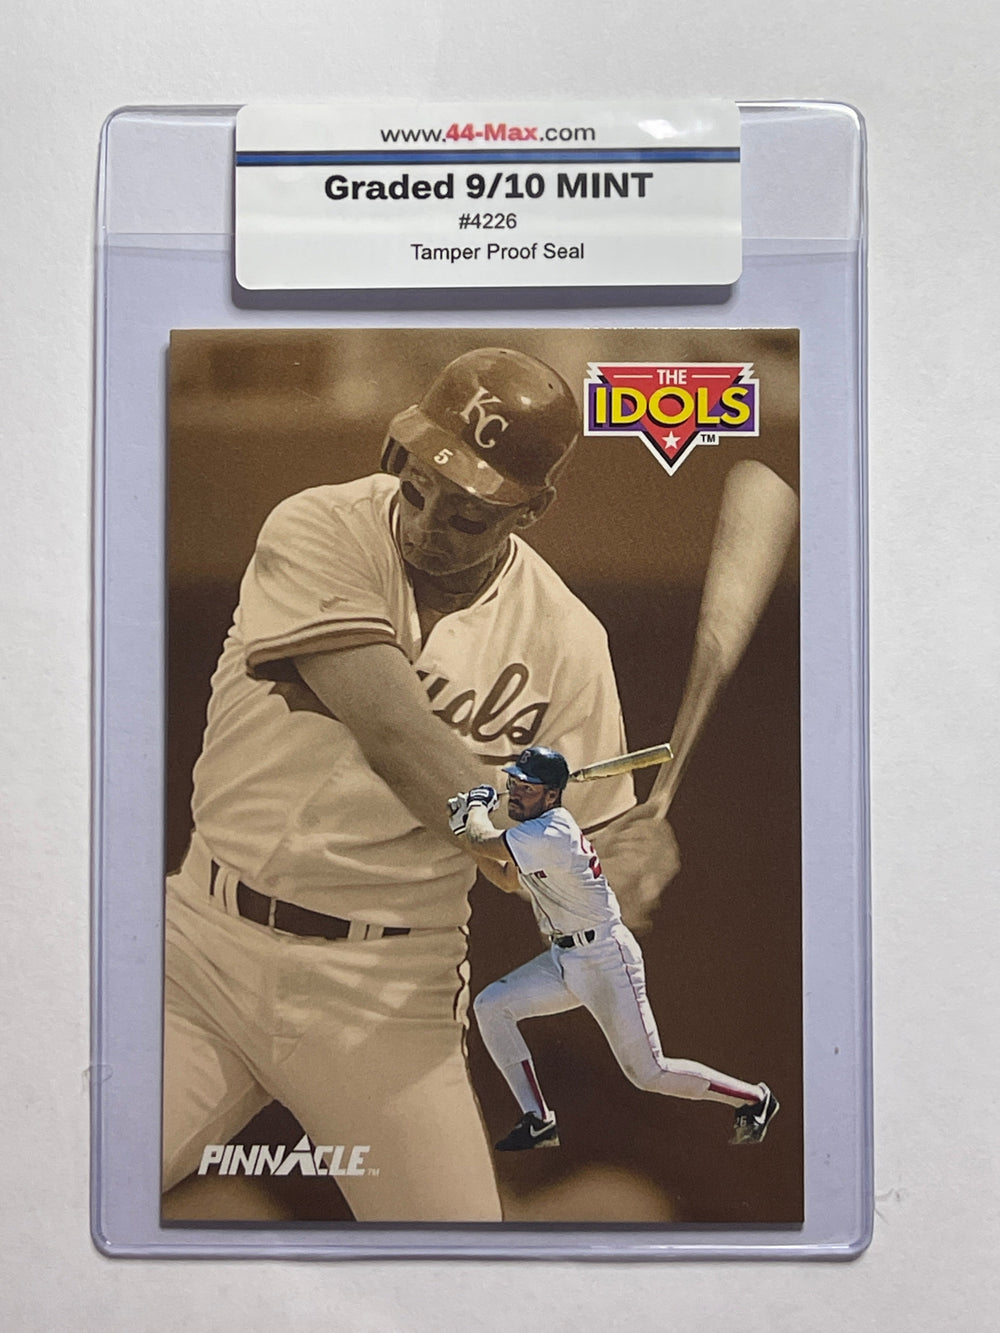 George Brett 1992 Pinnacle Baseball Card. 44-Max 9/10 Mint #4226